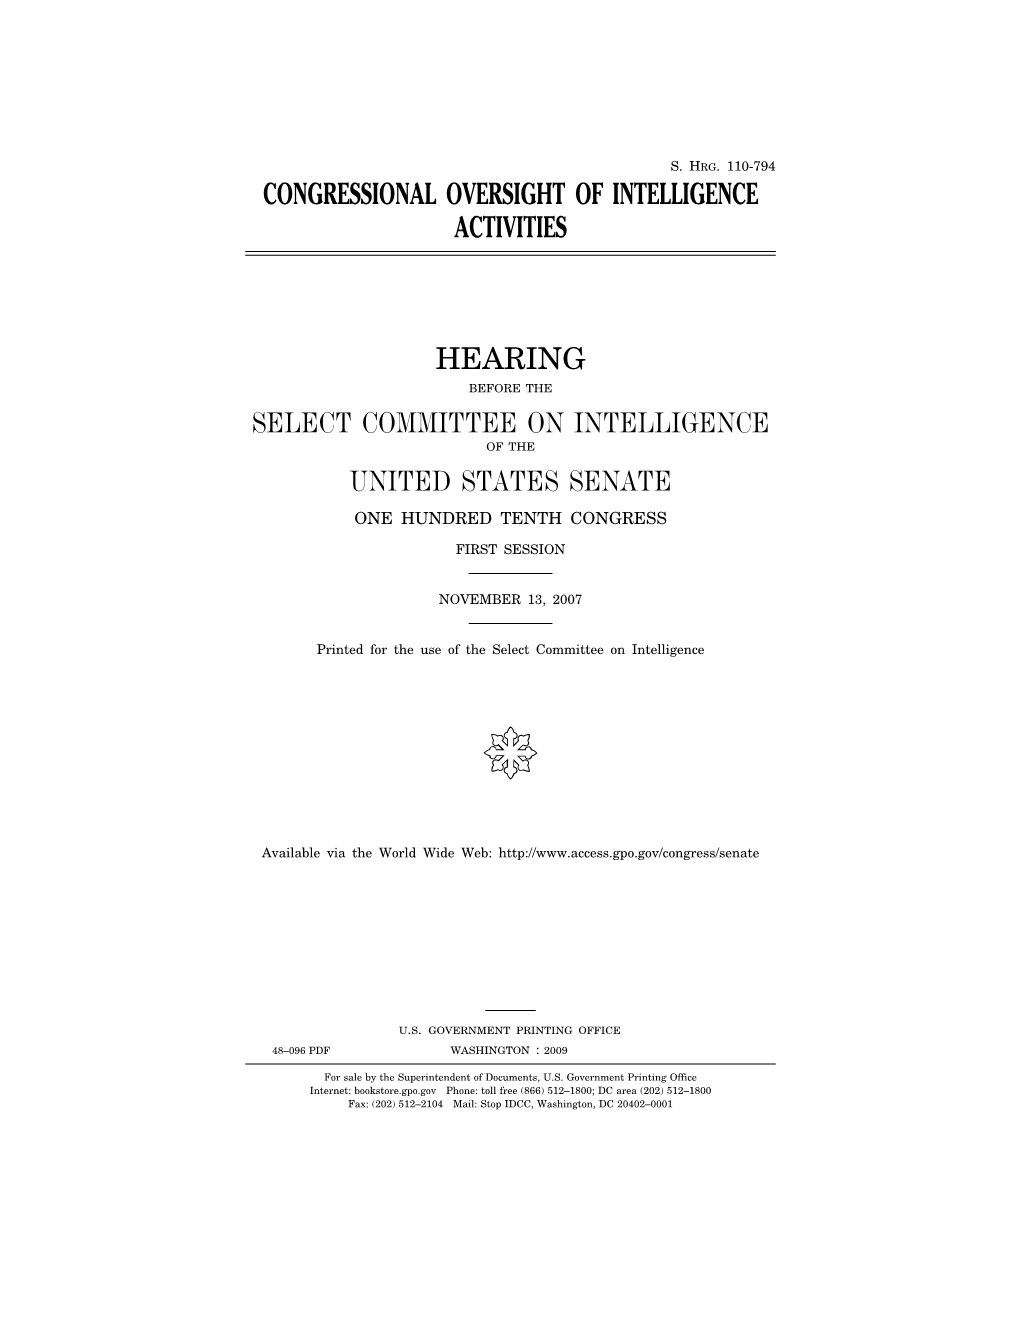 Congressional Oversight of Intelligence Activities